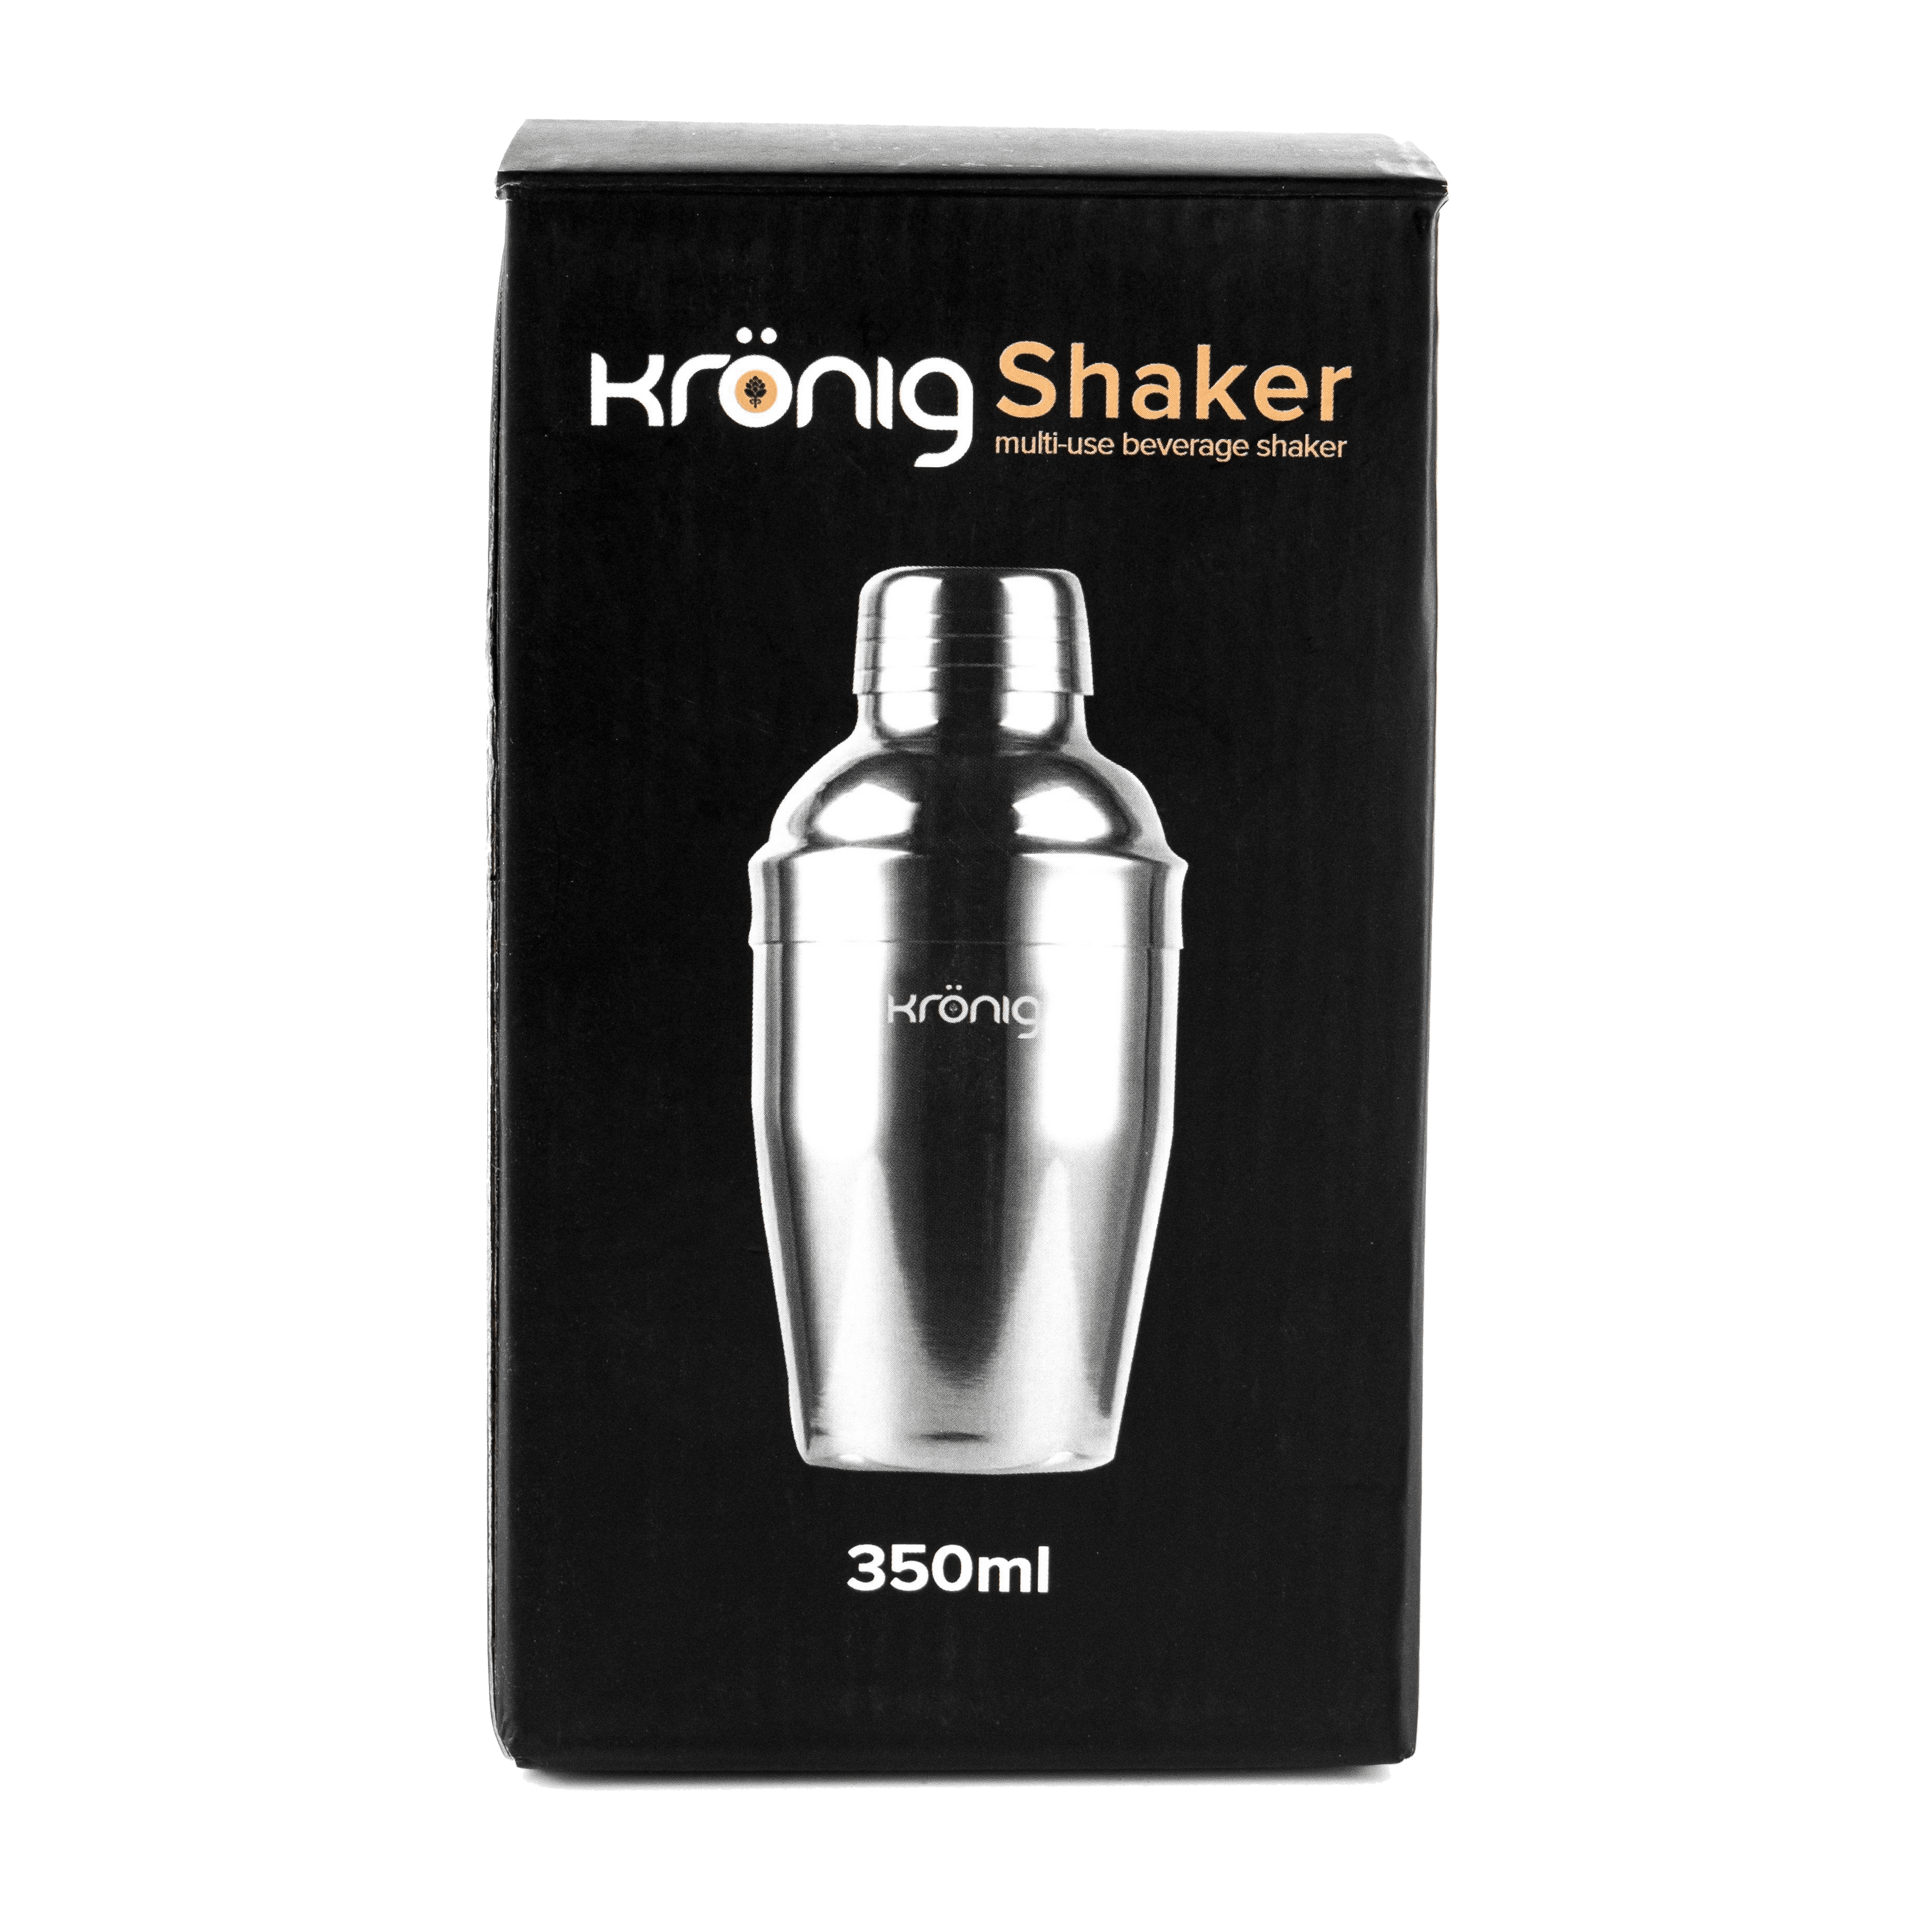 Kronig Shaker 350ml